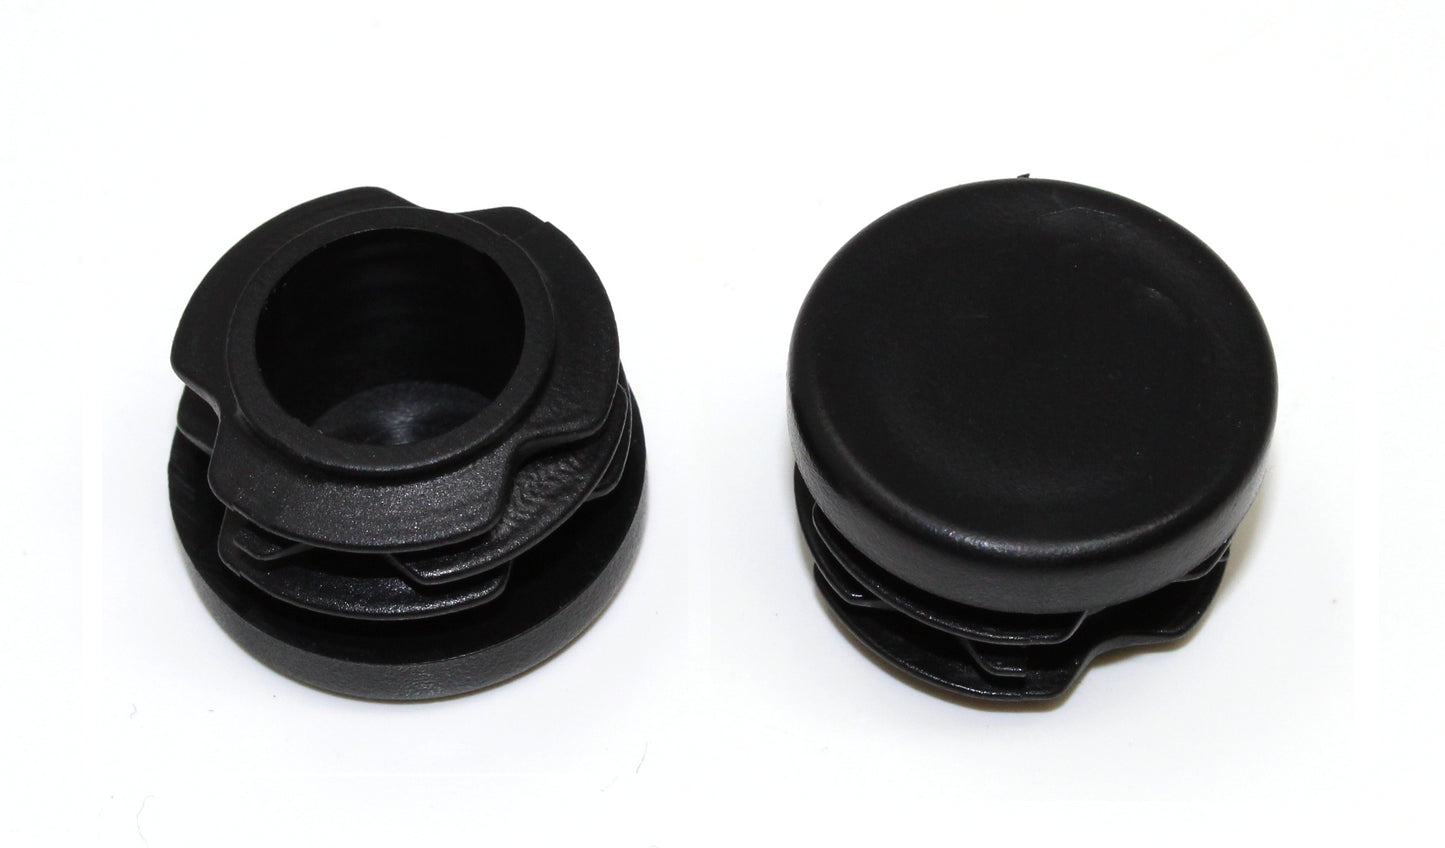 Tubing Caps 1" Round Black Plastic Tubing Hole Plug End Cap, 1 inch OD Tube Pipe Cover Plug